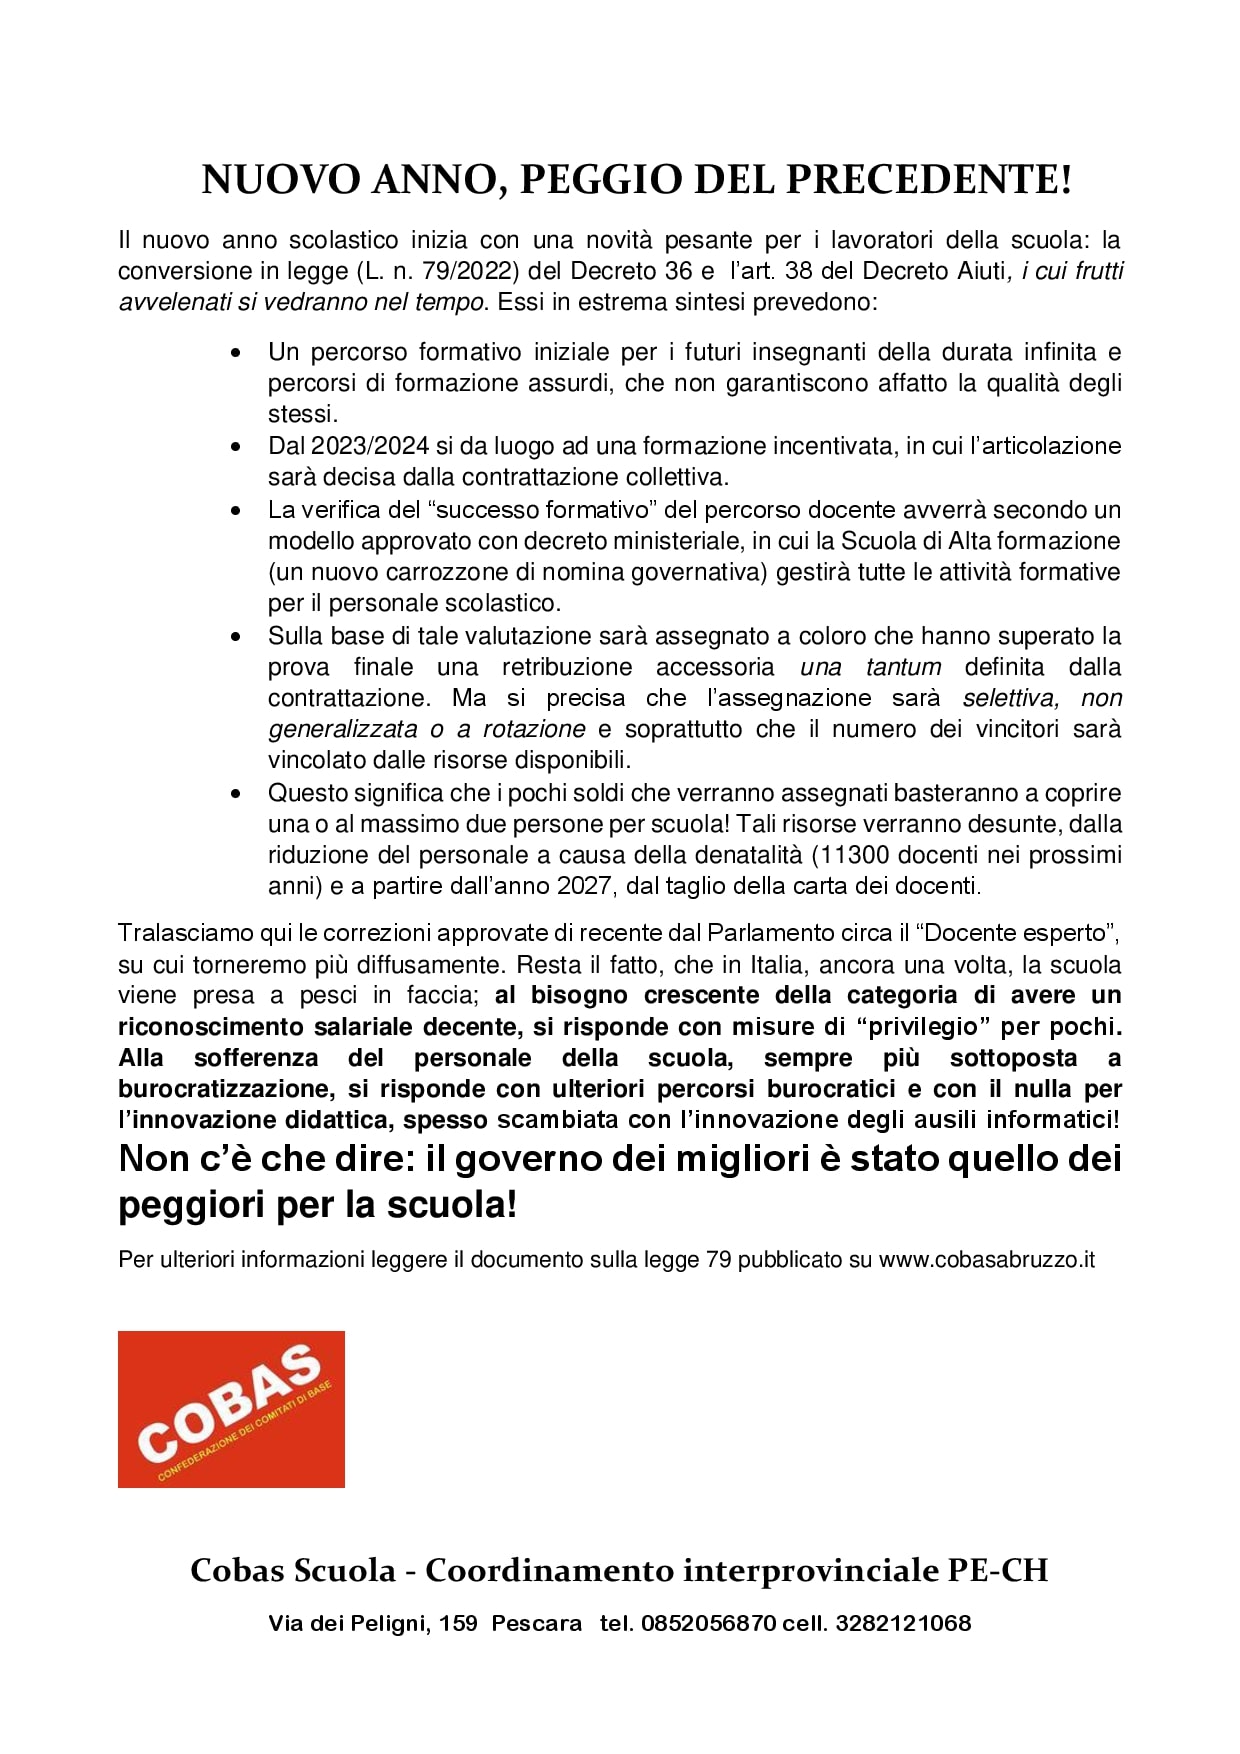 COBAS Documento sindacale legge 79-2022